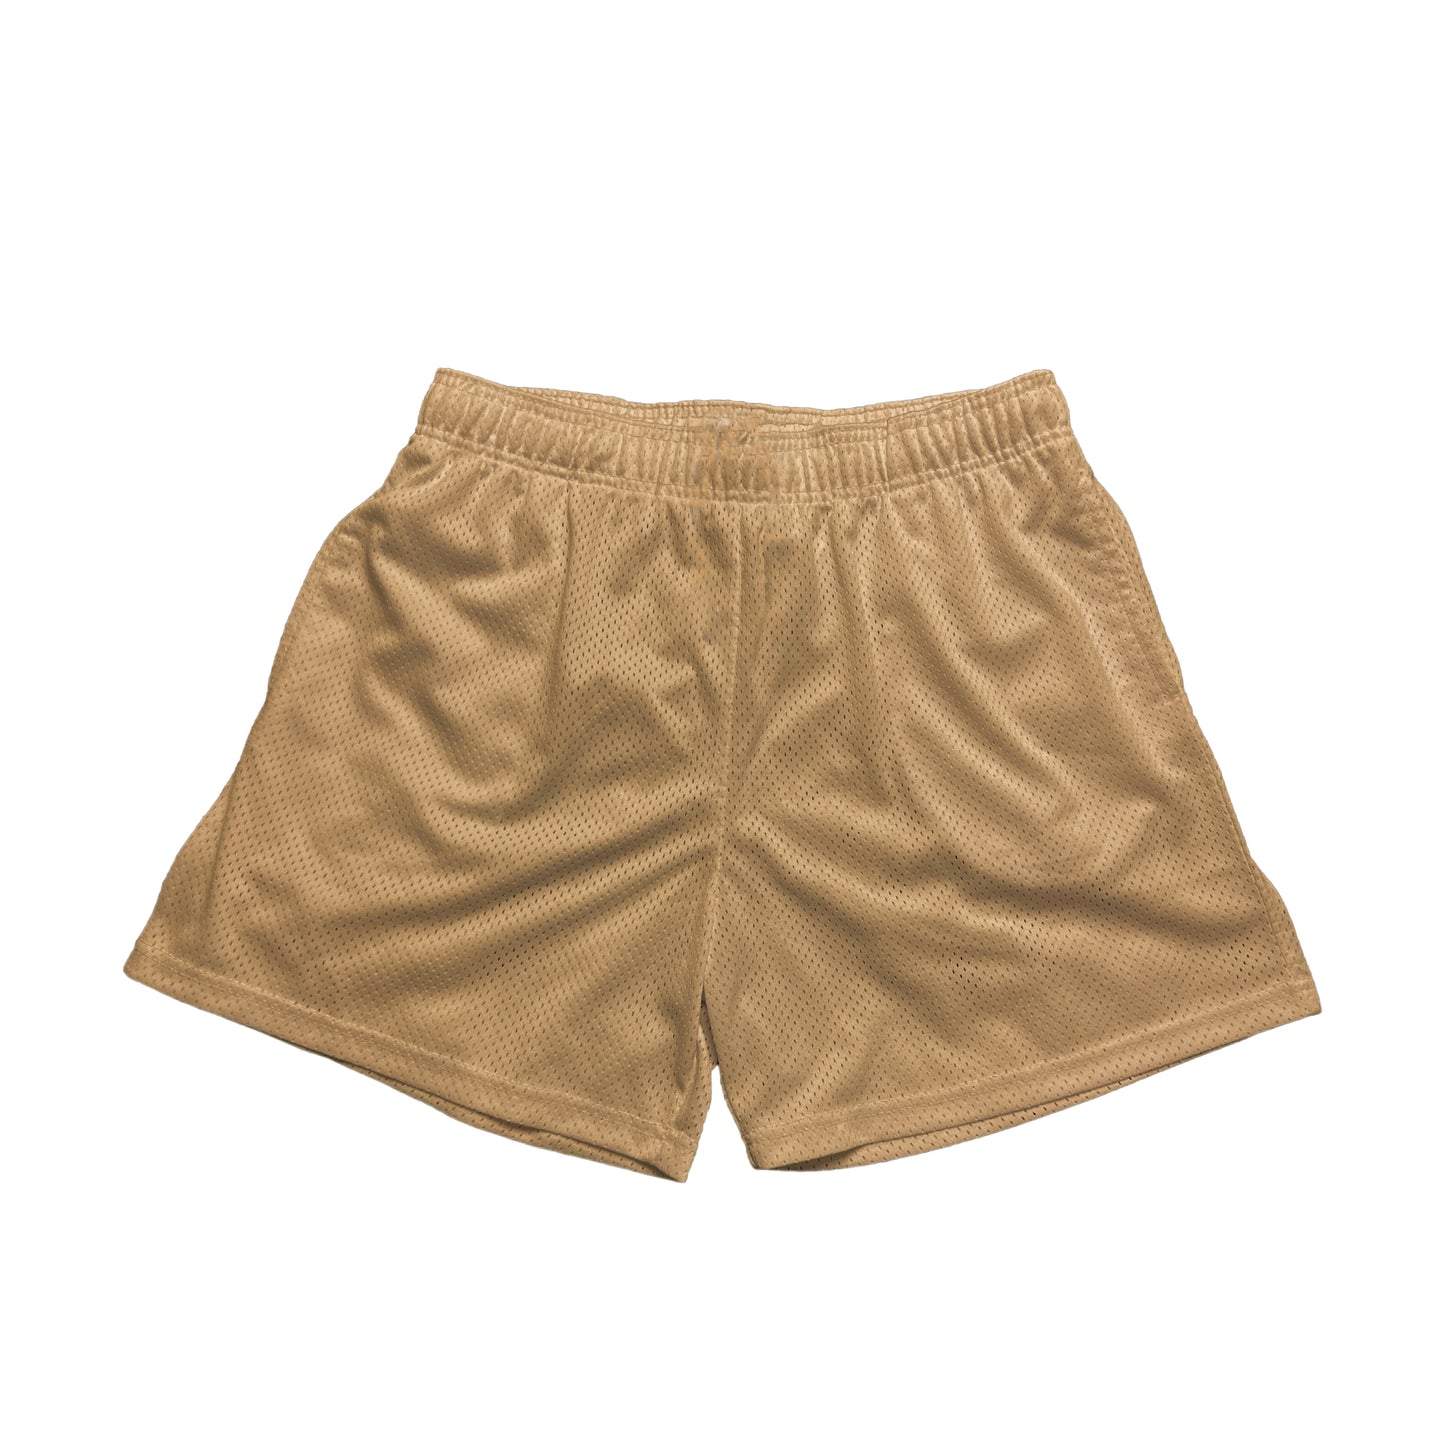 Bound Shorts - Tan